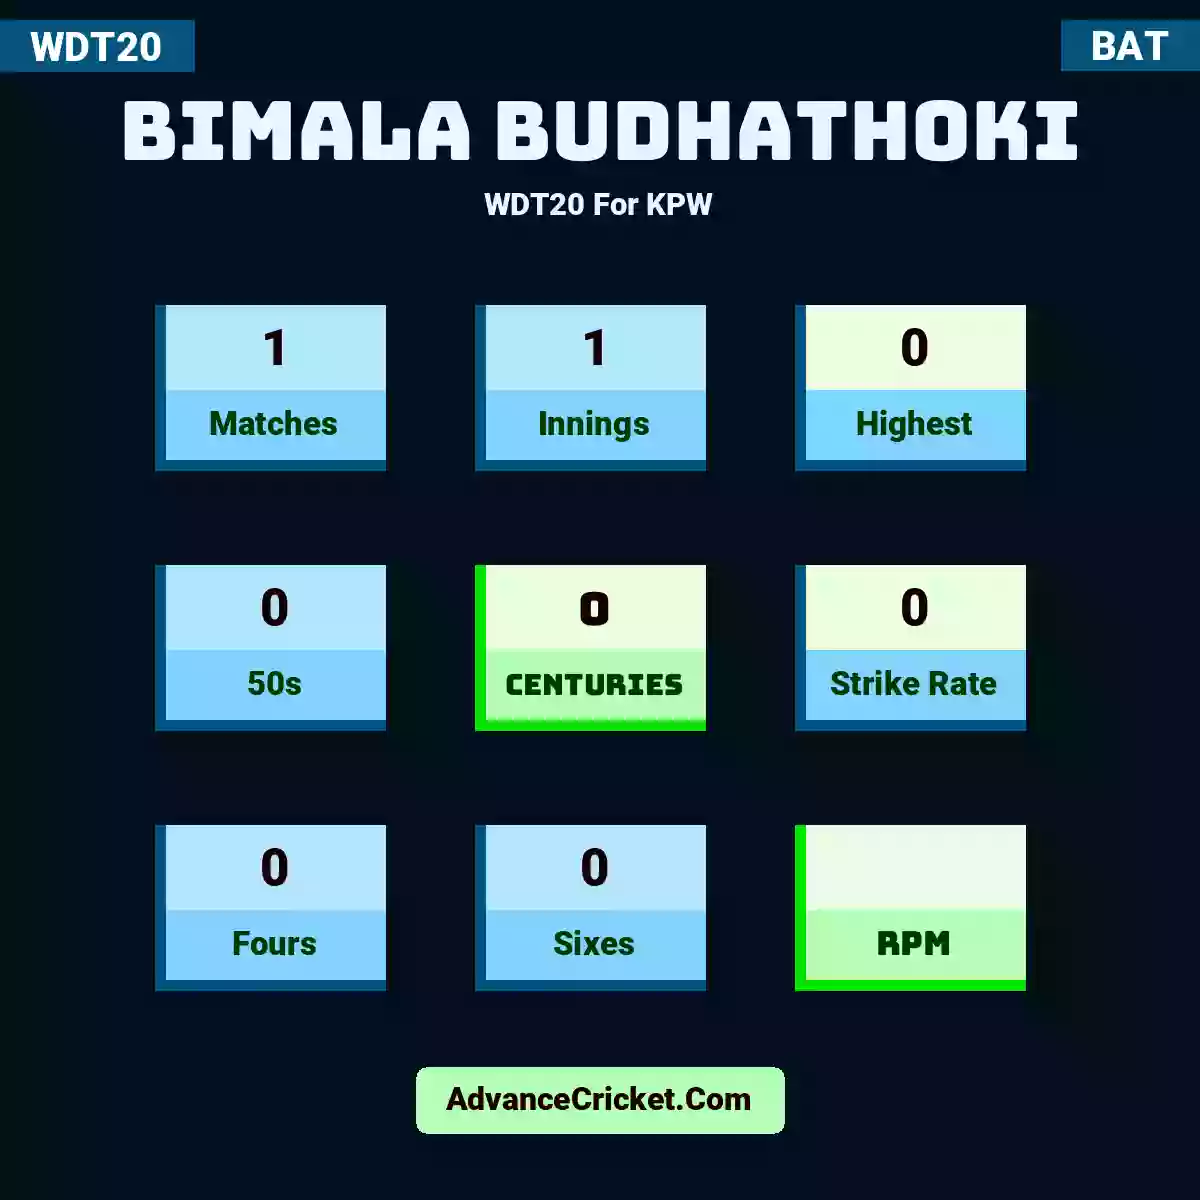 Bimala Budhathoki WDT20  For KPW, Bimala Budhathoki played 1 matches, scored 0 runs as highest, 0 half-centuries, and 0 centuries, with a strike rate of 0. B.Budhathoki hit 0 fours and 0 sixes.